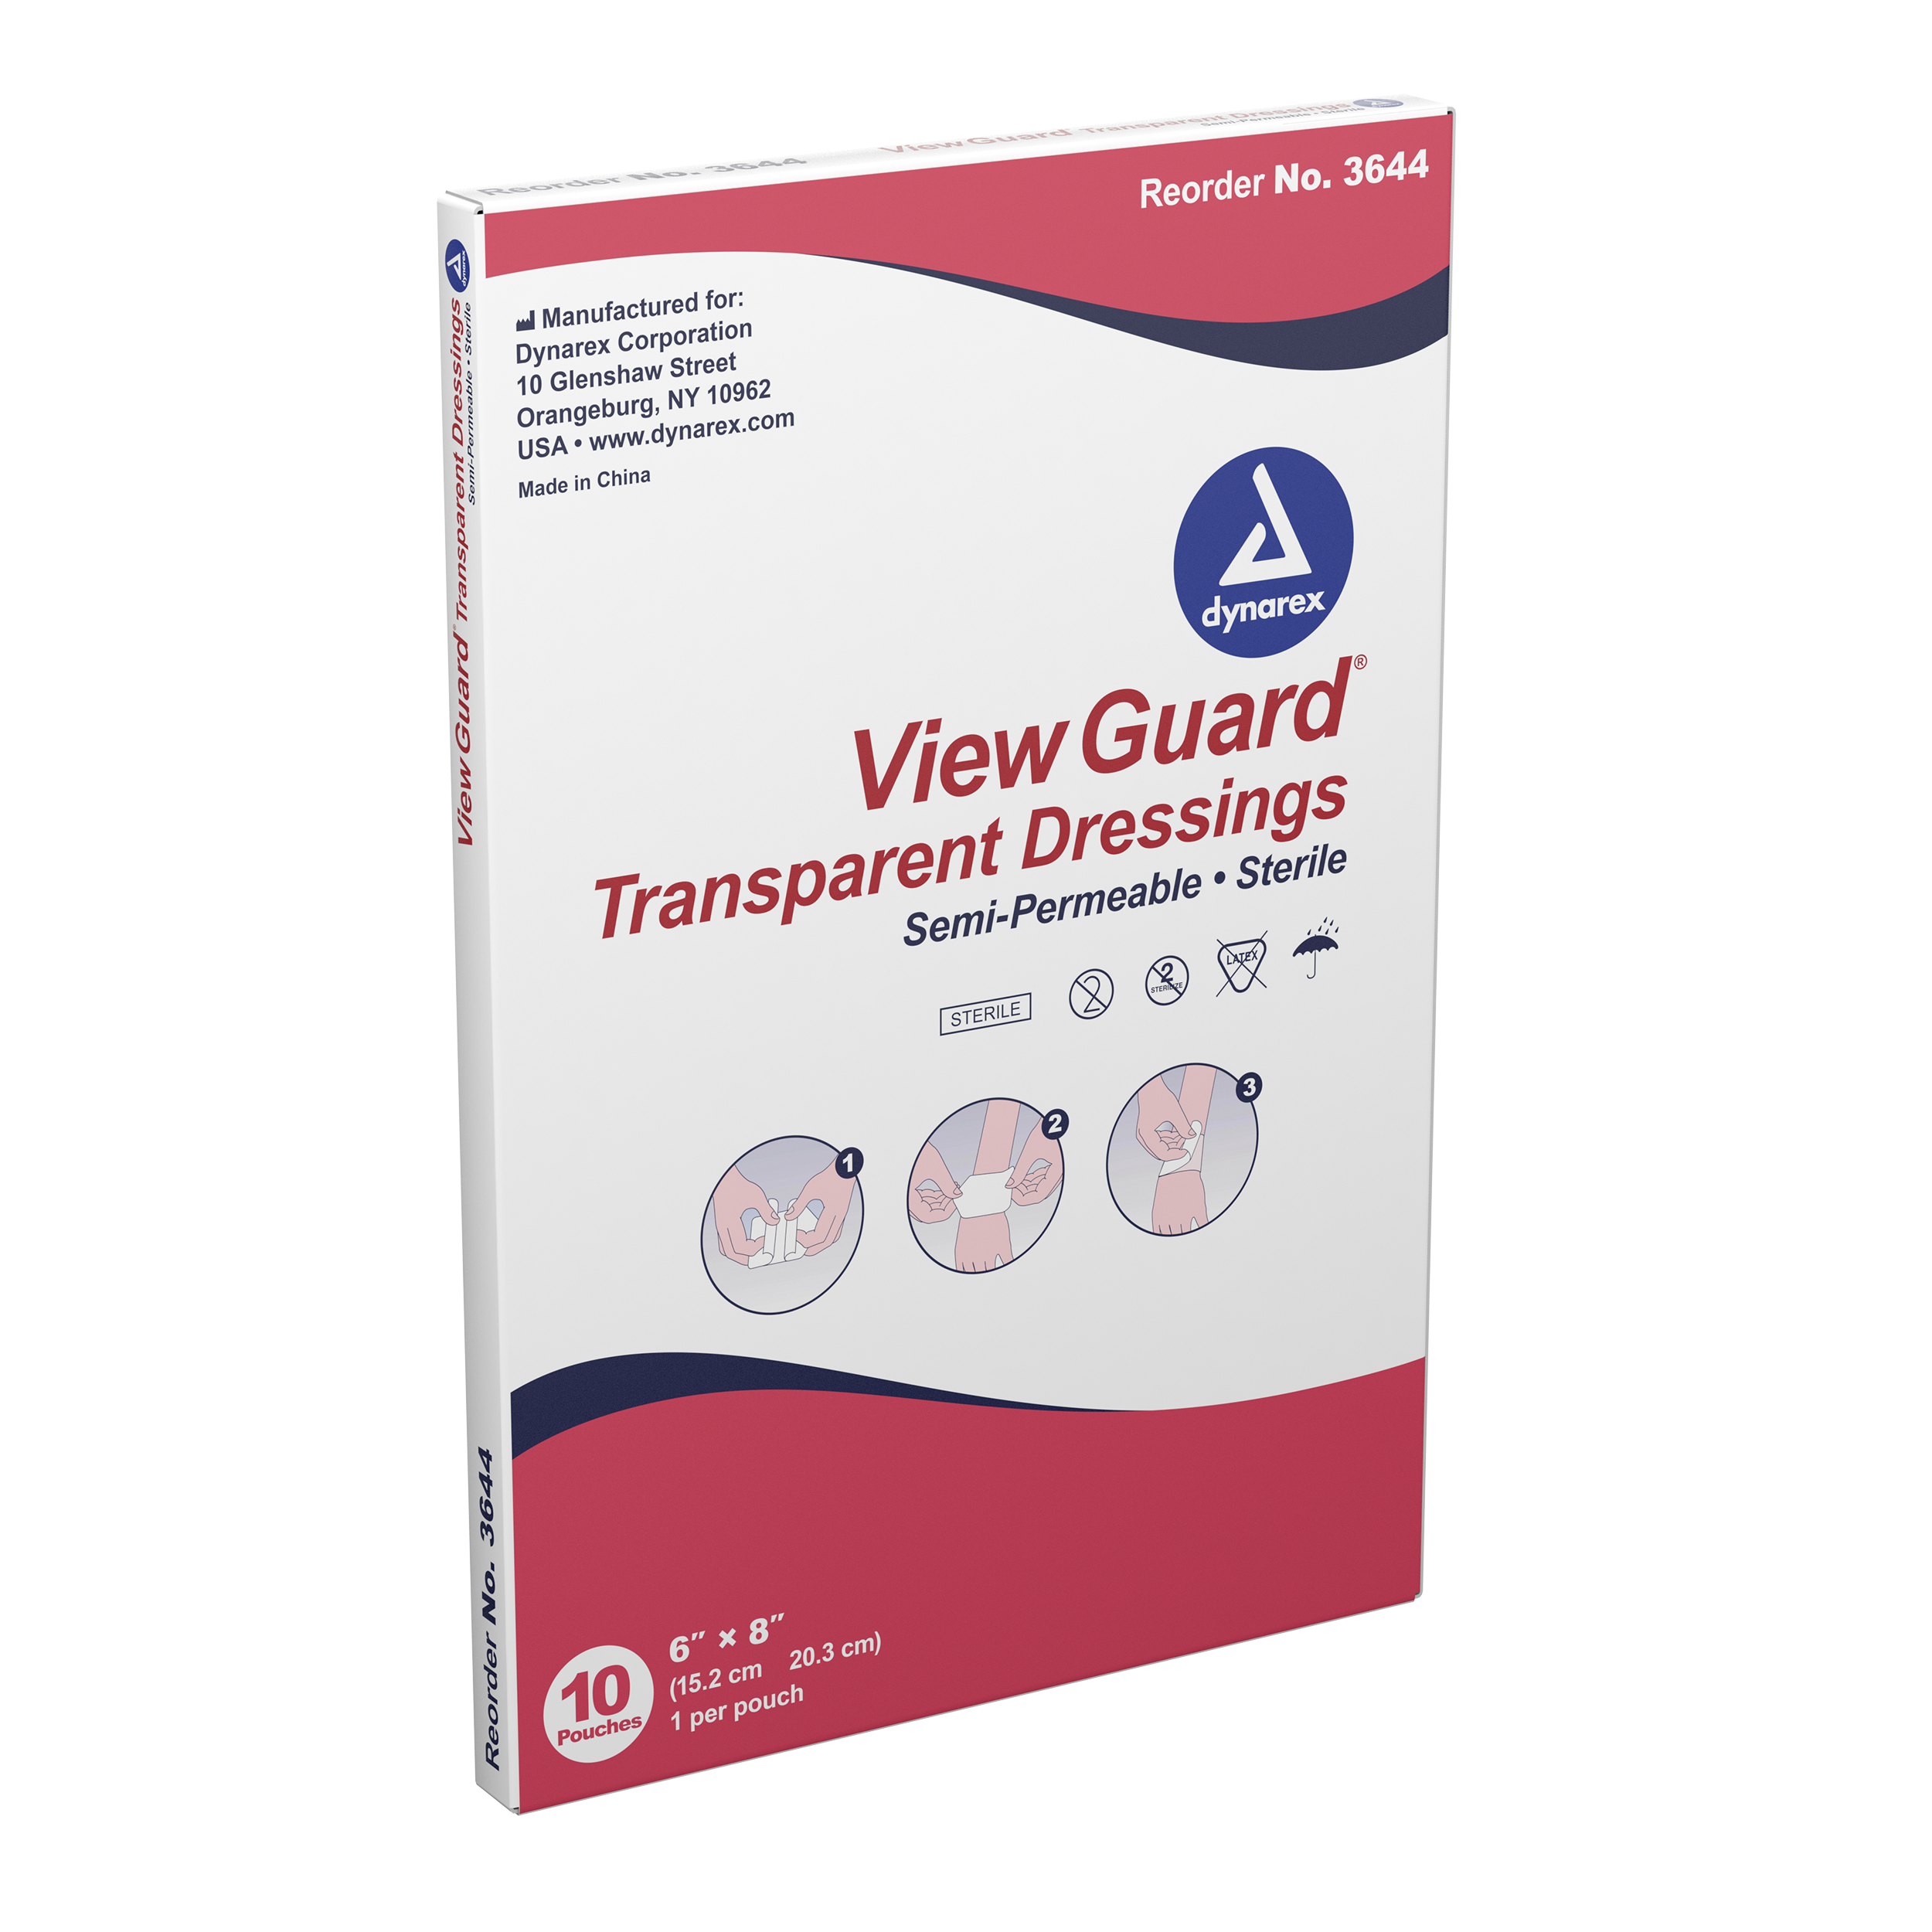 View Guard Transparent Dressings Sterile 6